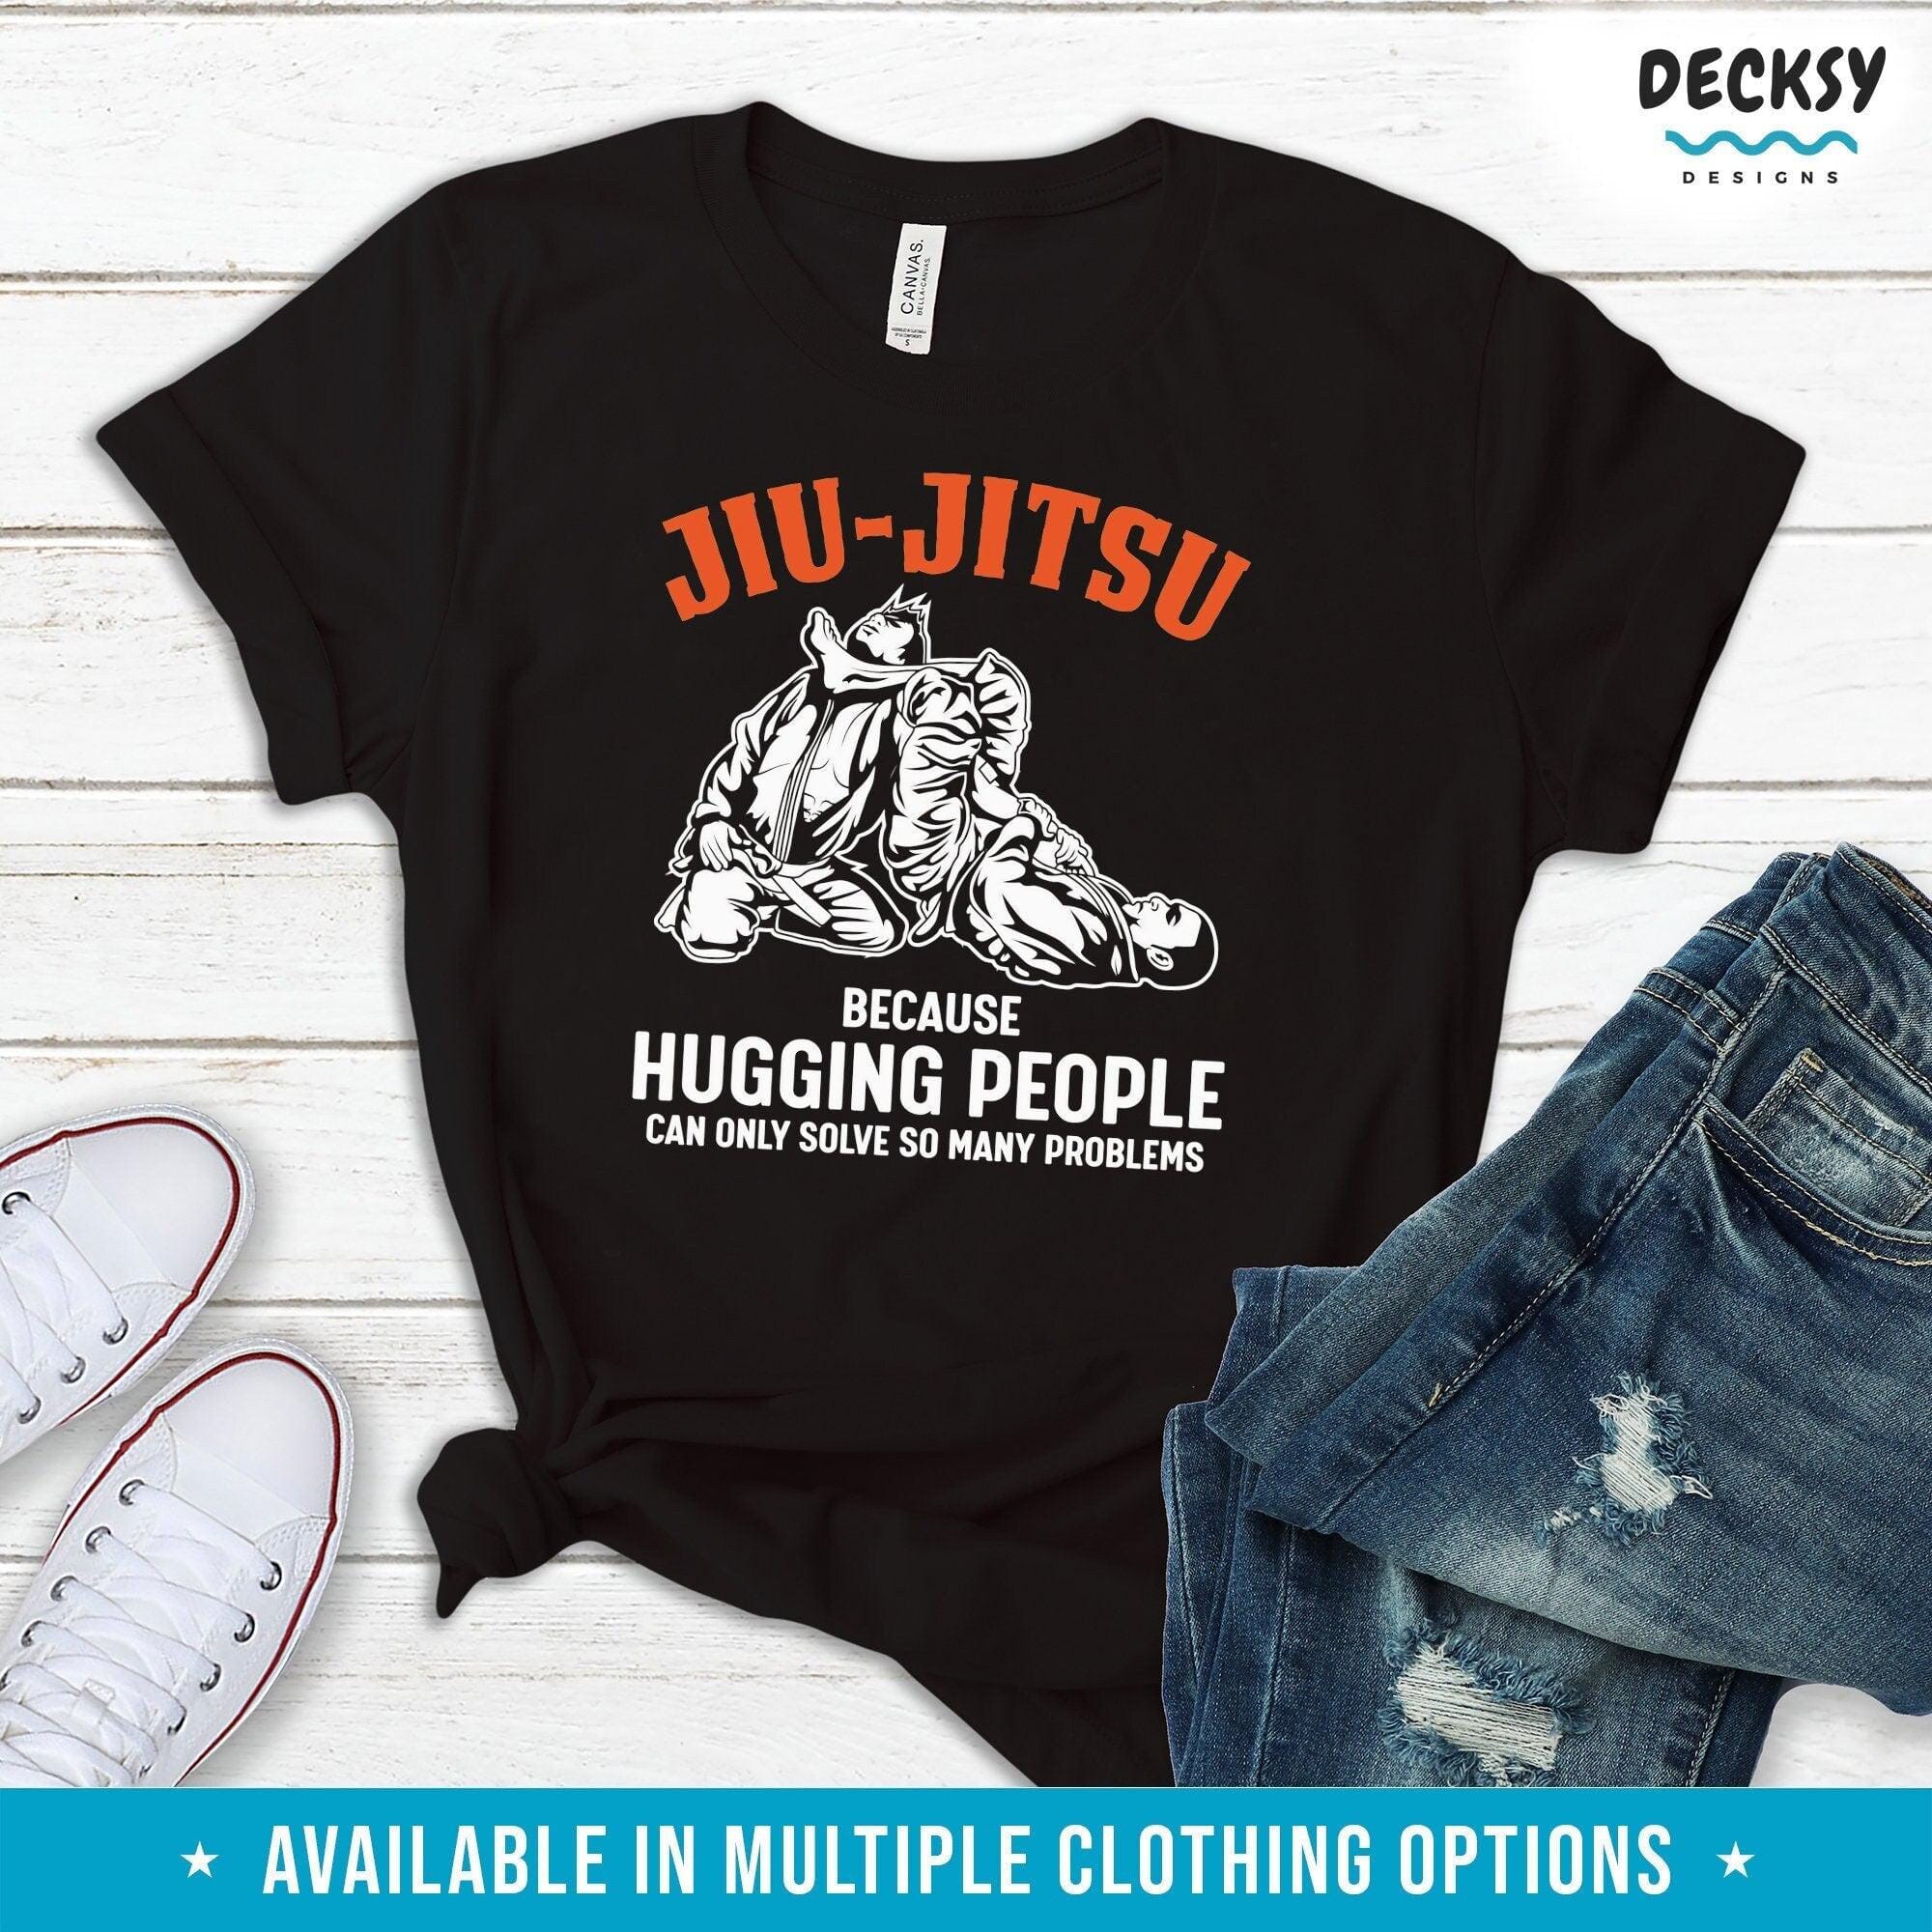 Jiujitsu Shirt, Brazilian Jiu Jitsu Gift-Clothing:Gender-Neutral Adult Clothing:Tops & Tees:T-shirts:Graphic Tees-DecksyDesigns